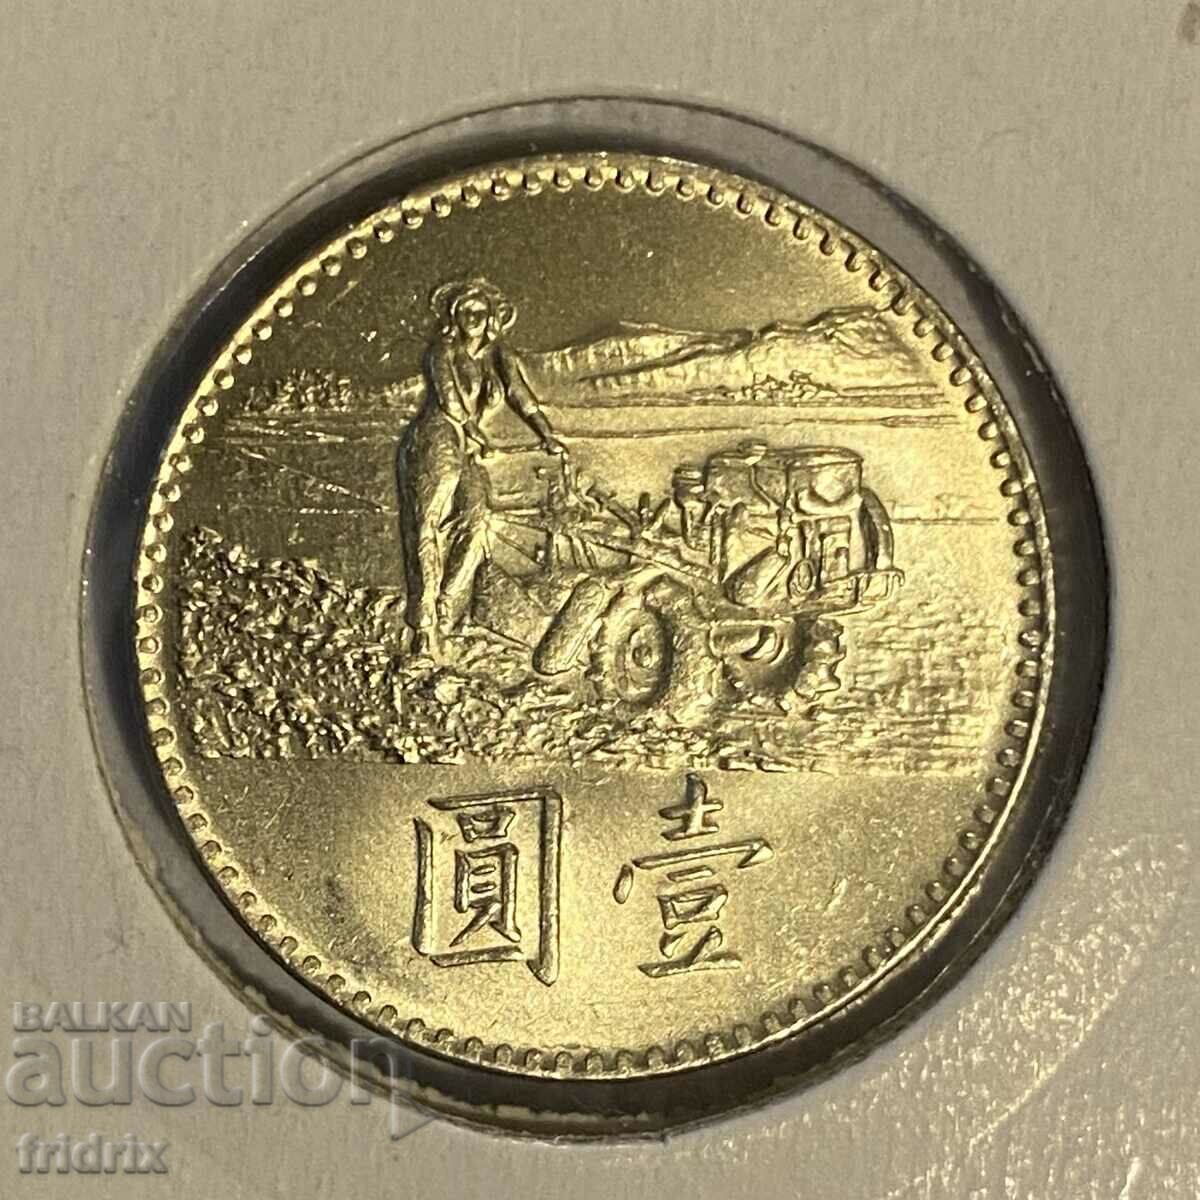 Тайван 1 юан долар ФАО /  Taiwan 1 dollar 1969 FAO